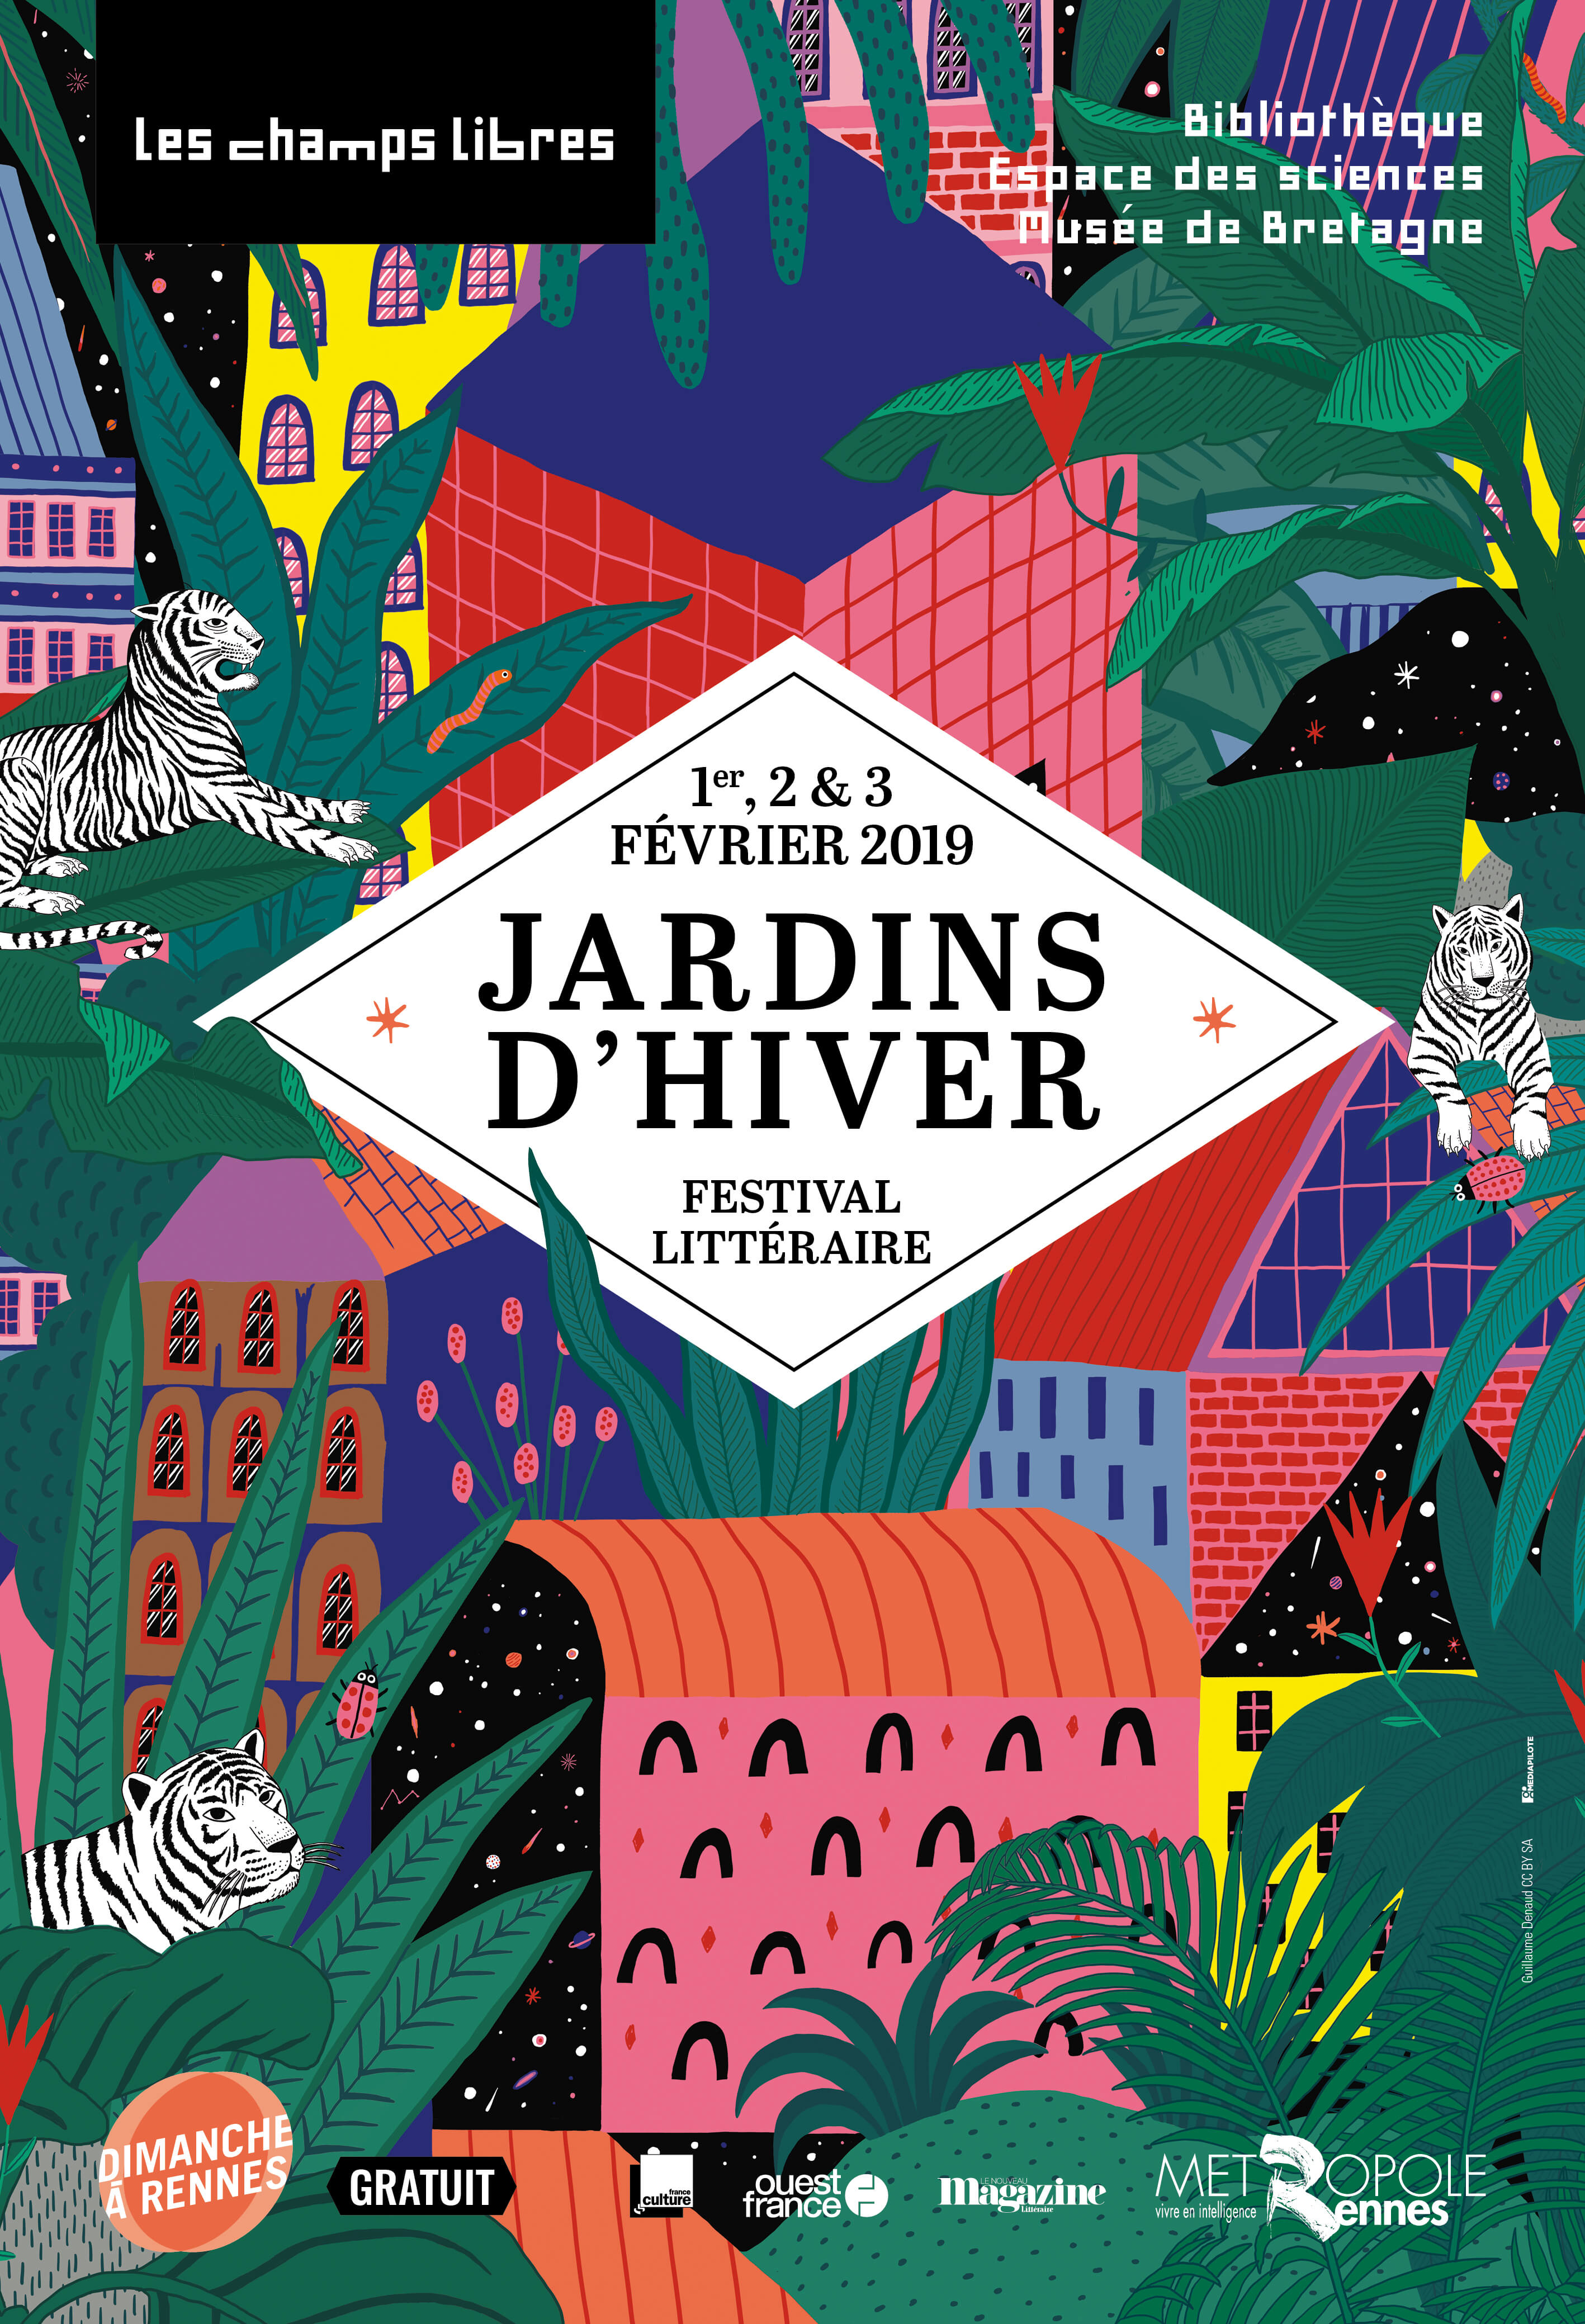 “Jardins d’hiver” (“Winter Gardens”) - Literary festival